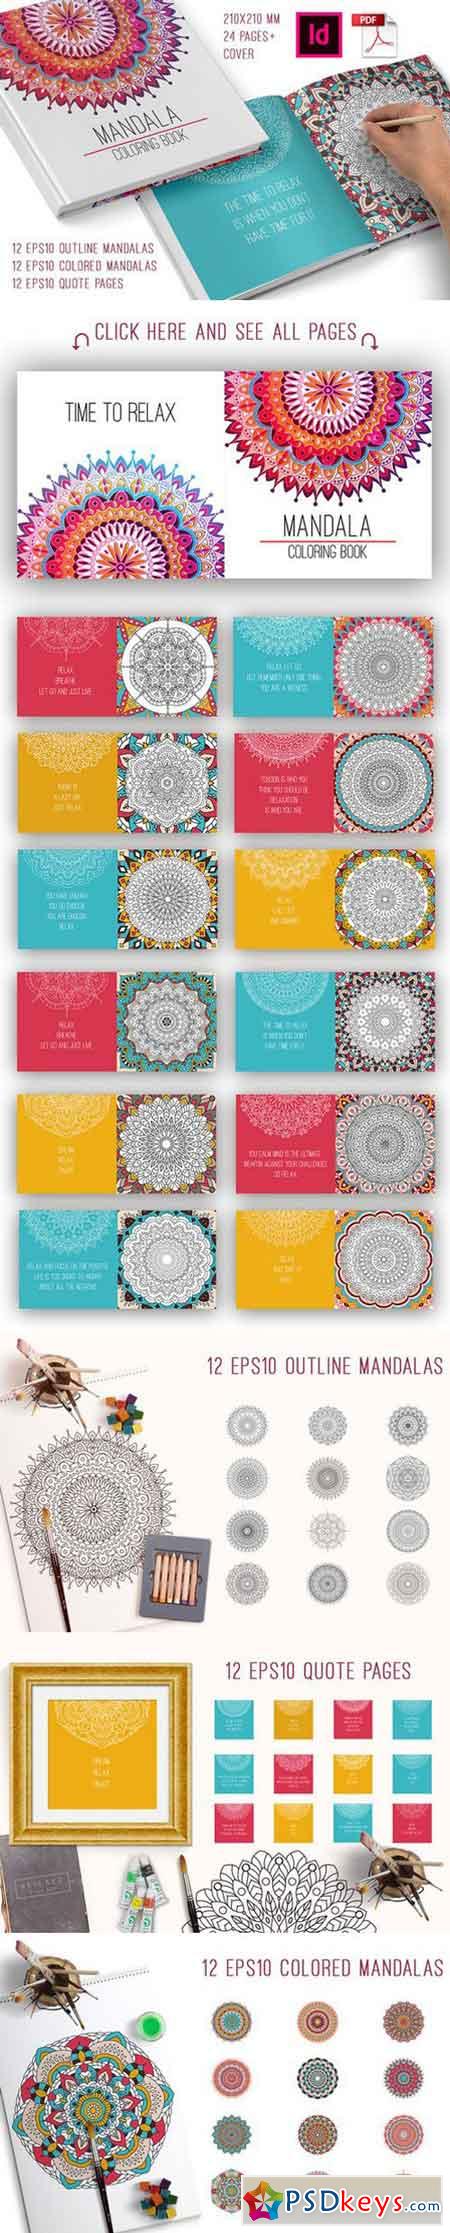 Mandala coloring book for adults 741732